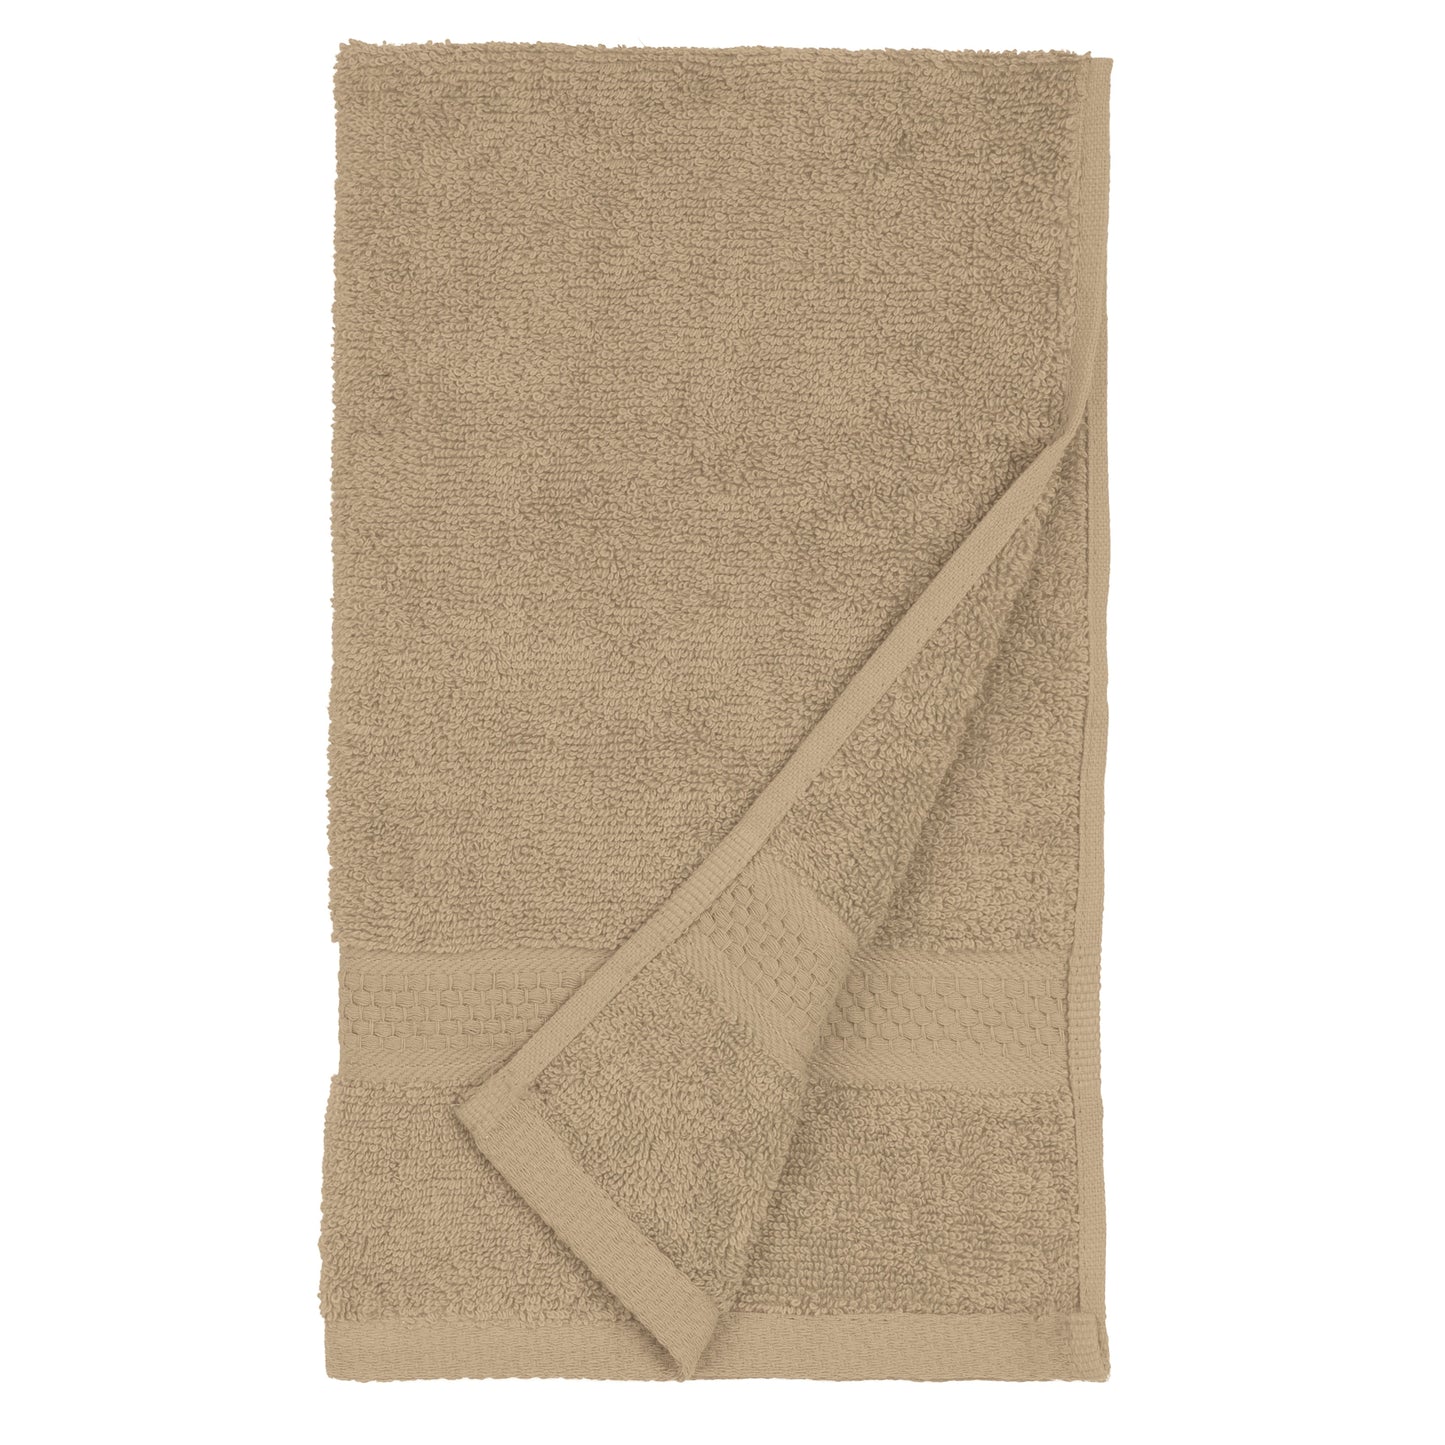 American Dawn | Jumbo 16X28 Inch Linen Salon Towel